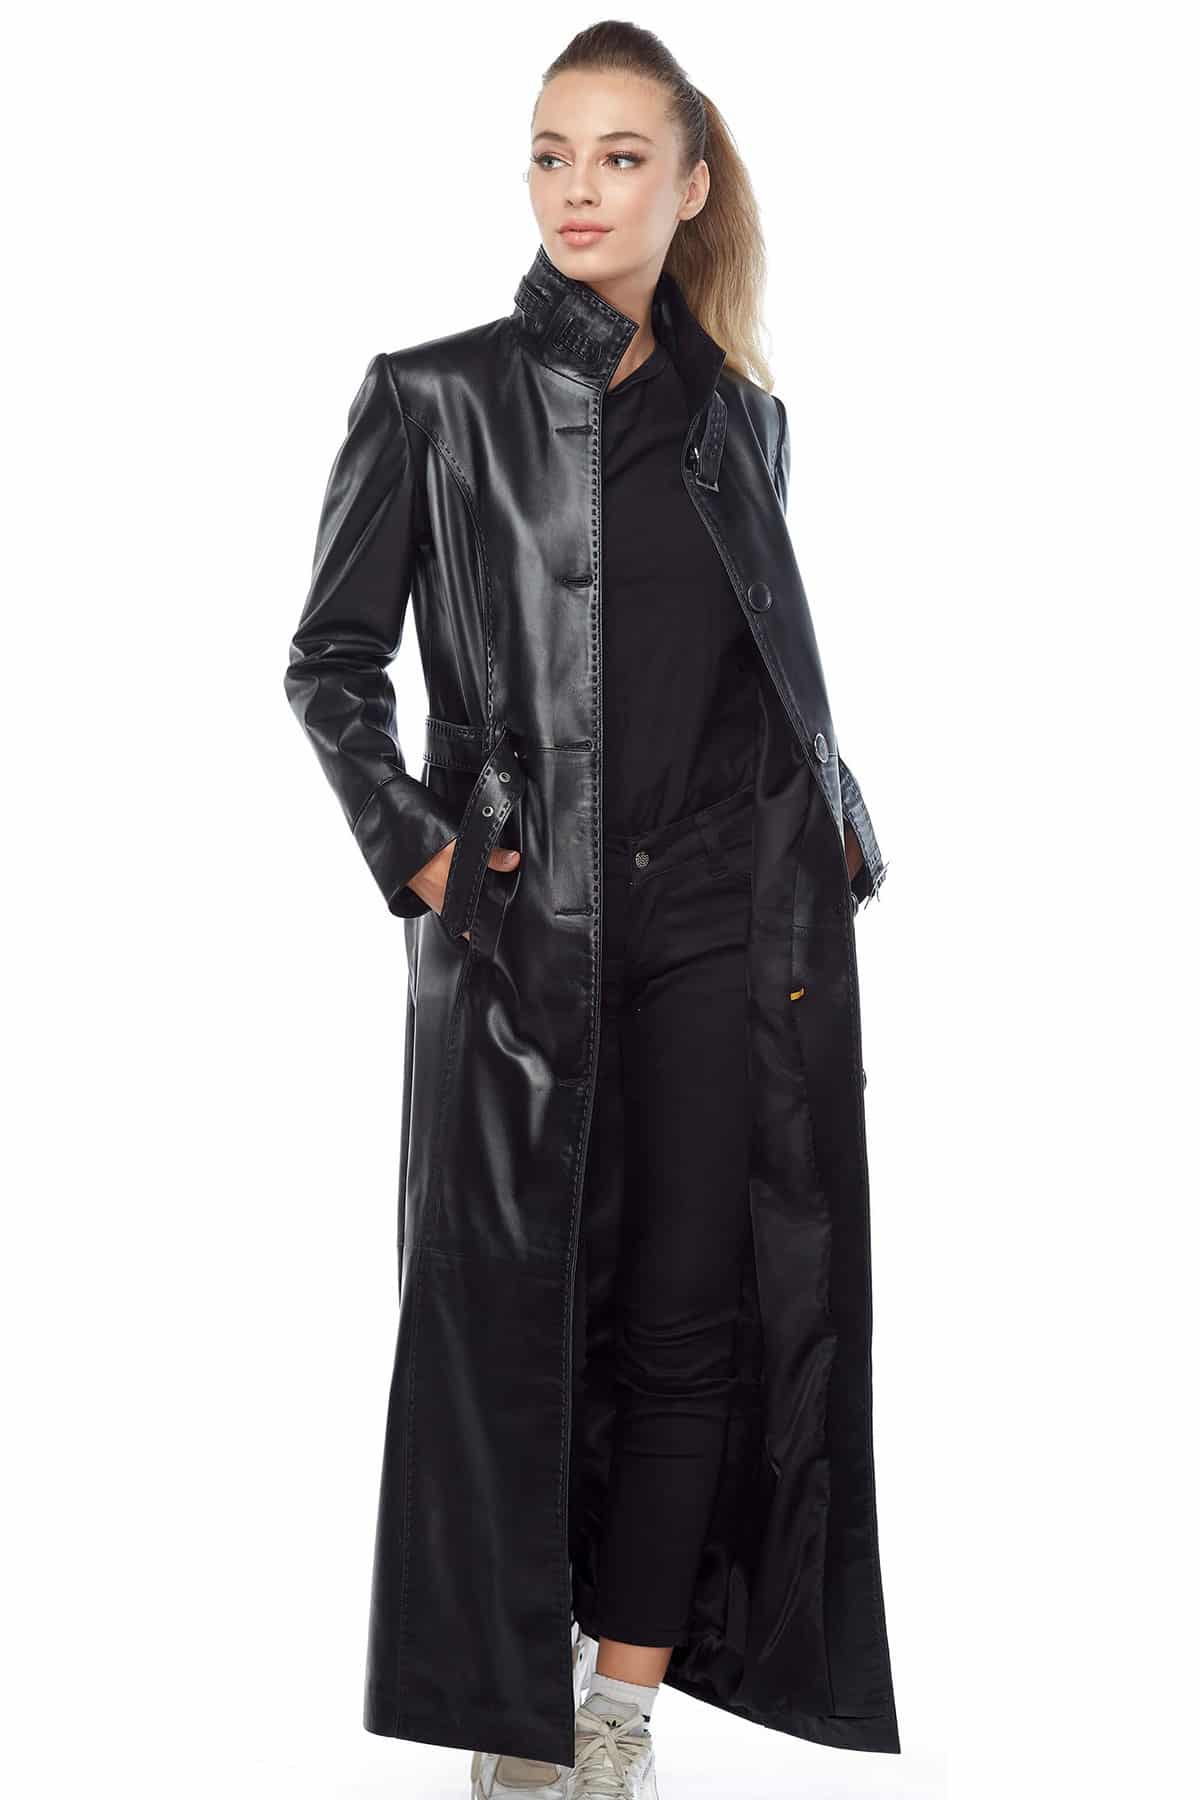 Blake Leather Black Trench Coat Women Side